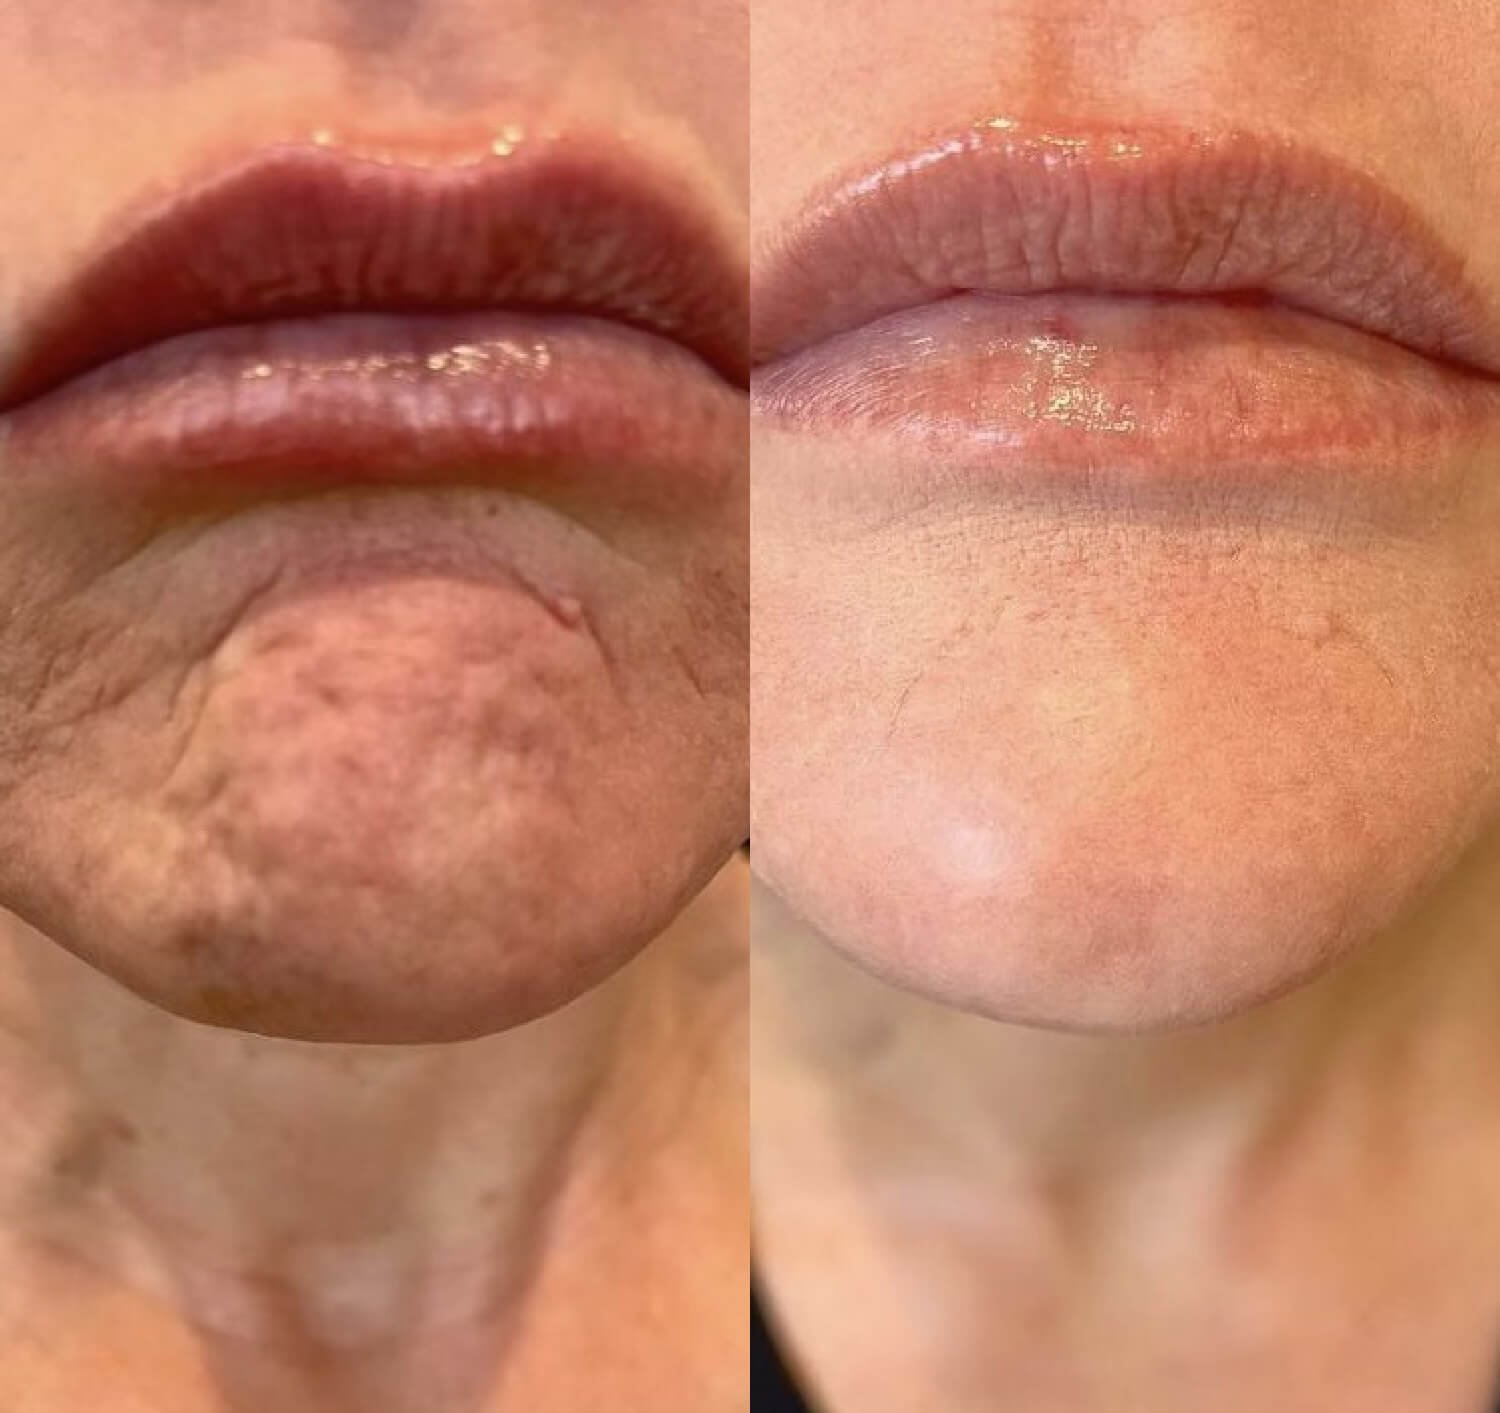 Lisa Azevedo botox natural looking lip results before and after.jpg